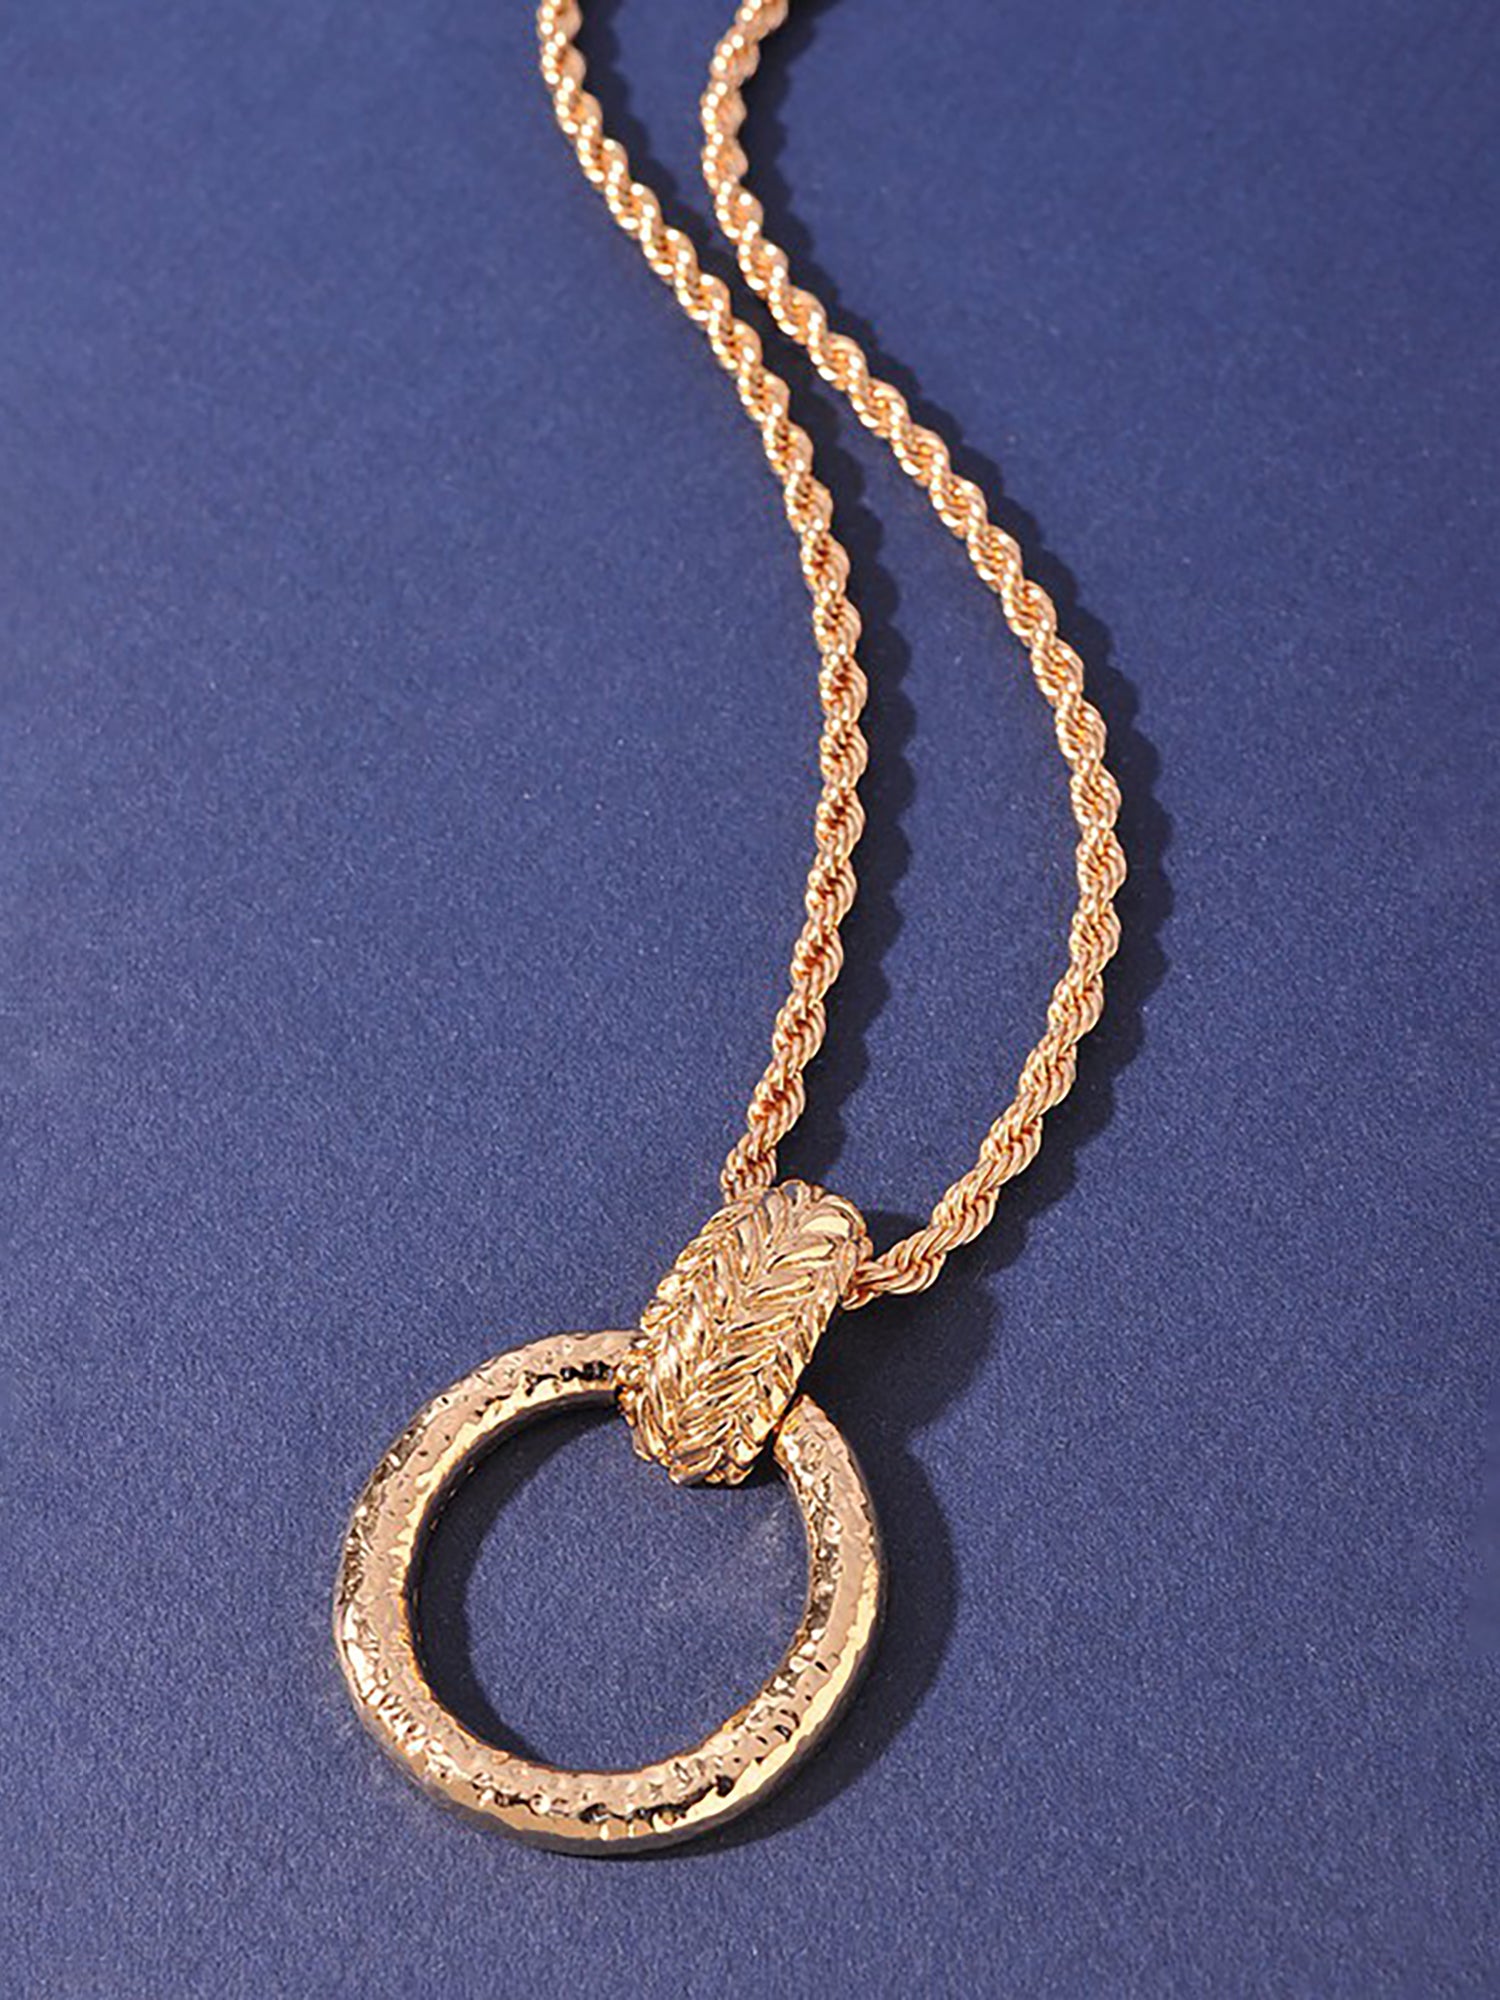 Vintage Florentine Necklace